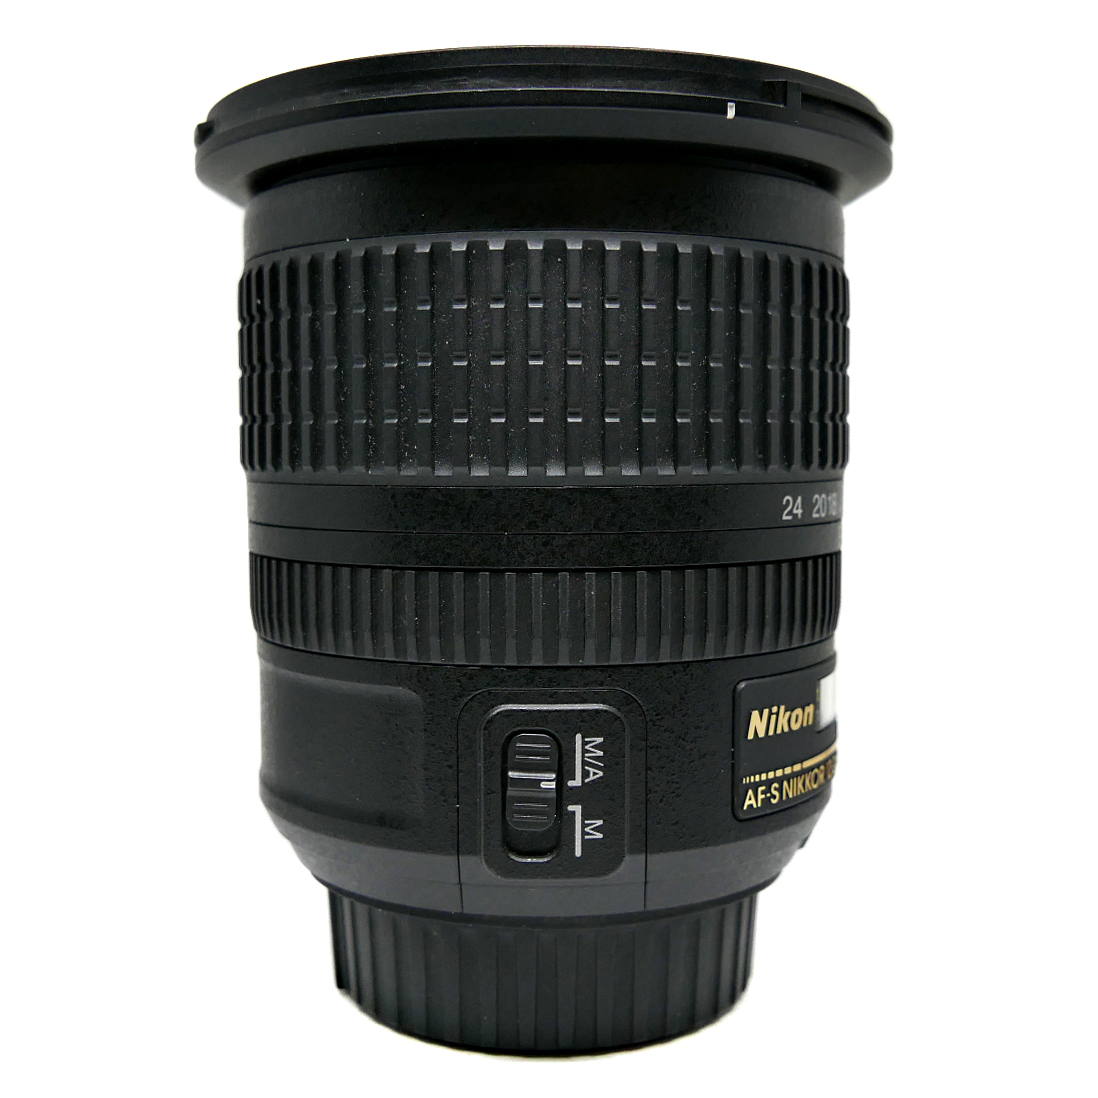 (Myyty) Nikon AF-S Nikkor 10-24mm f/3.5-4.5 G ED DX (käytetty)